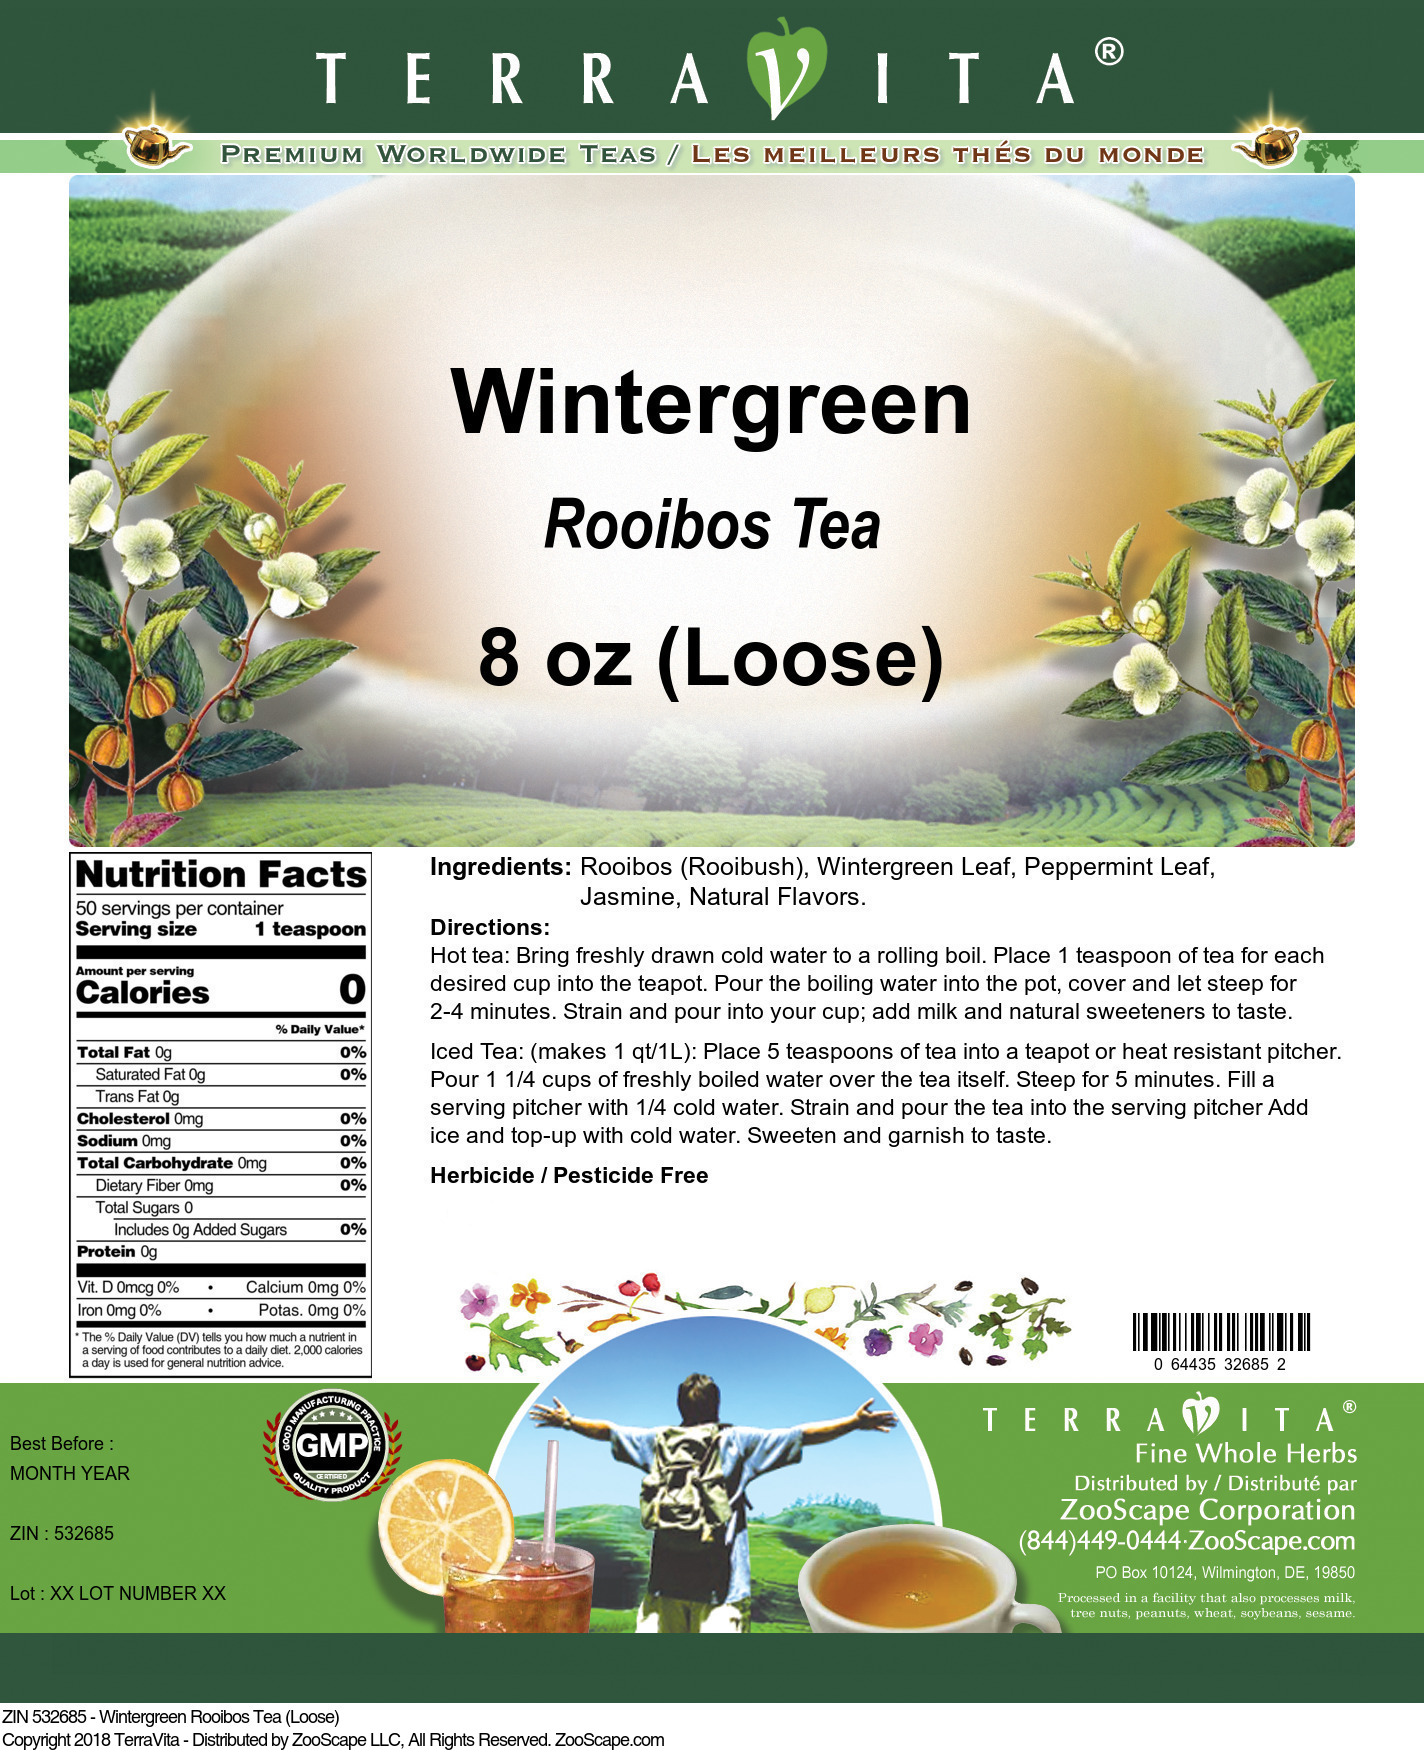 Wintergreen Rooibos Tea (Loose) - Label